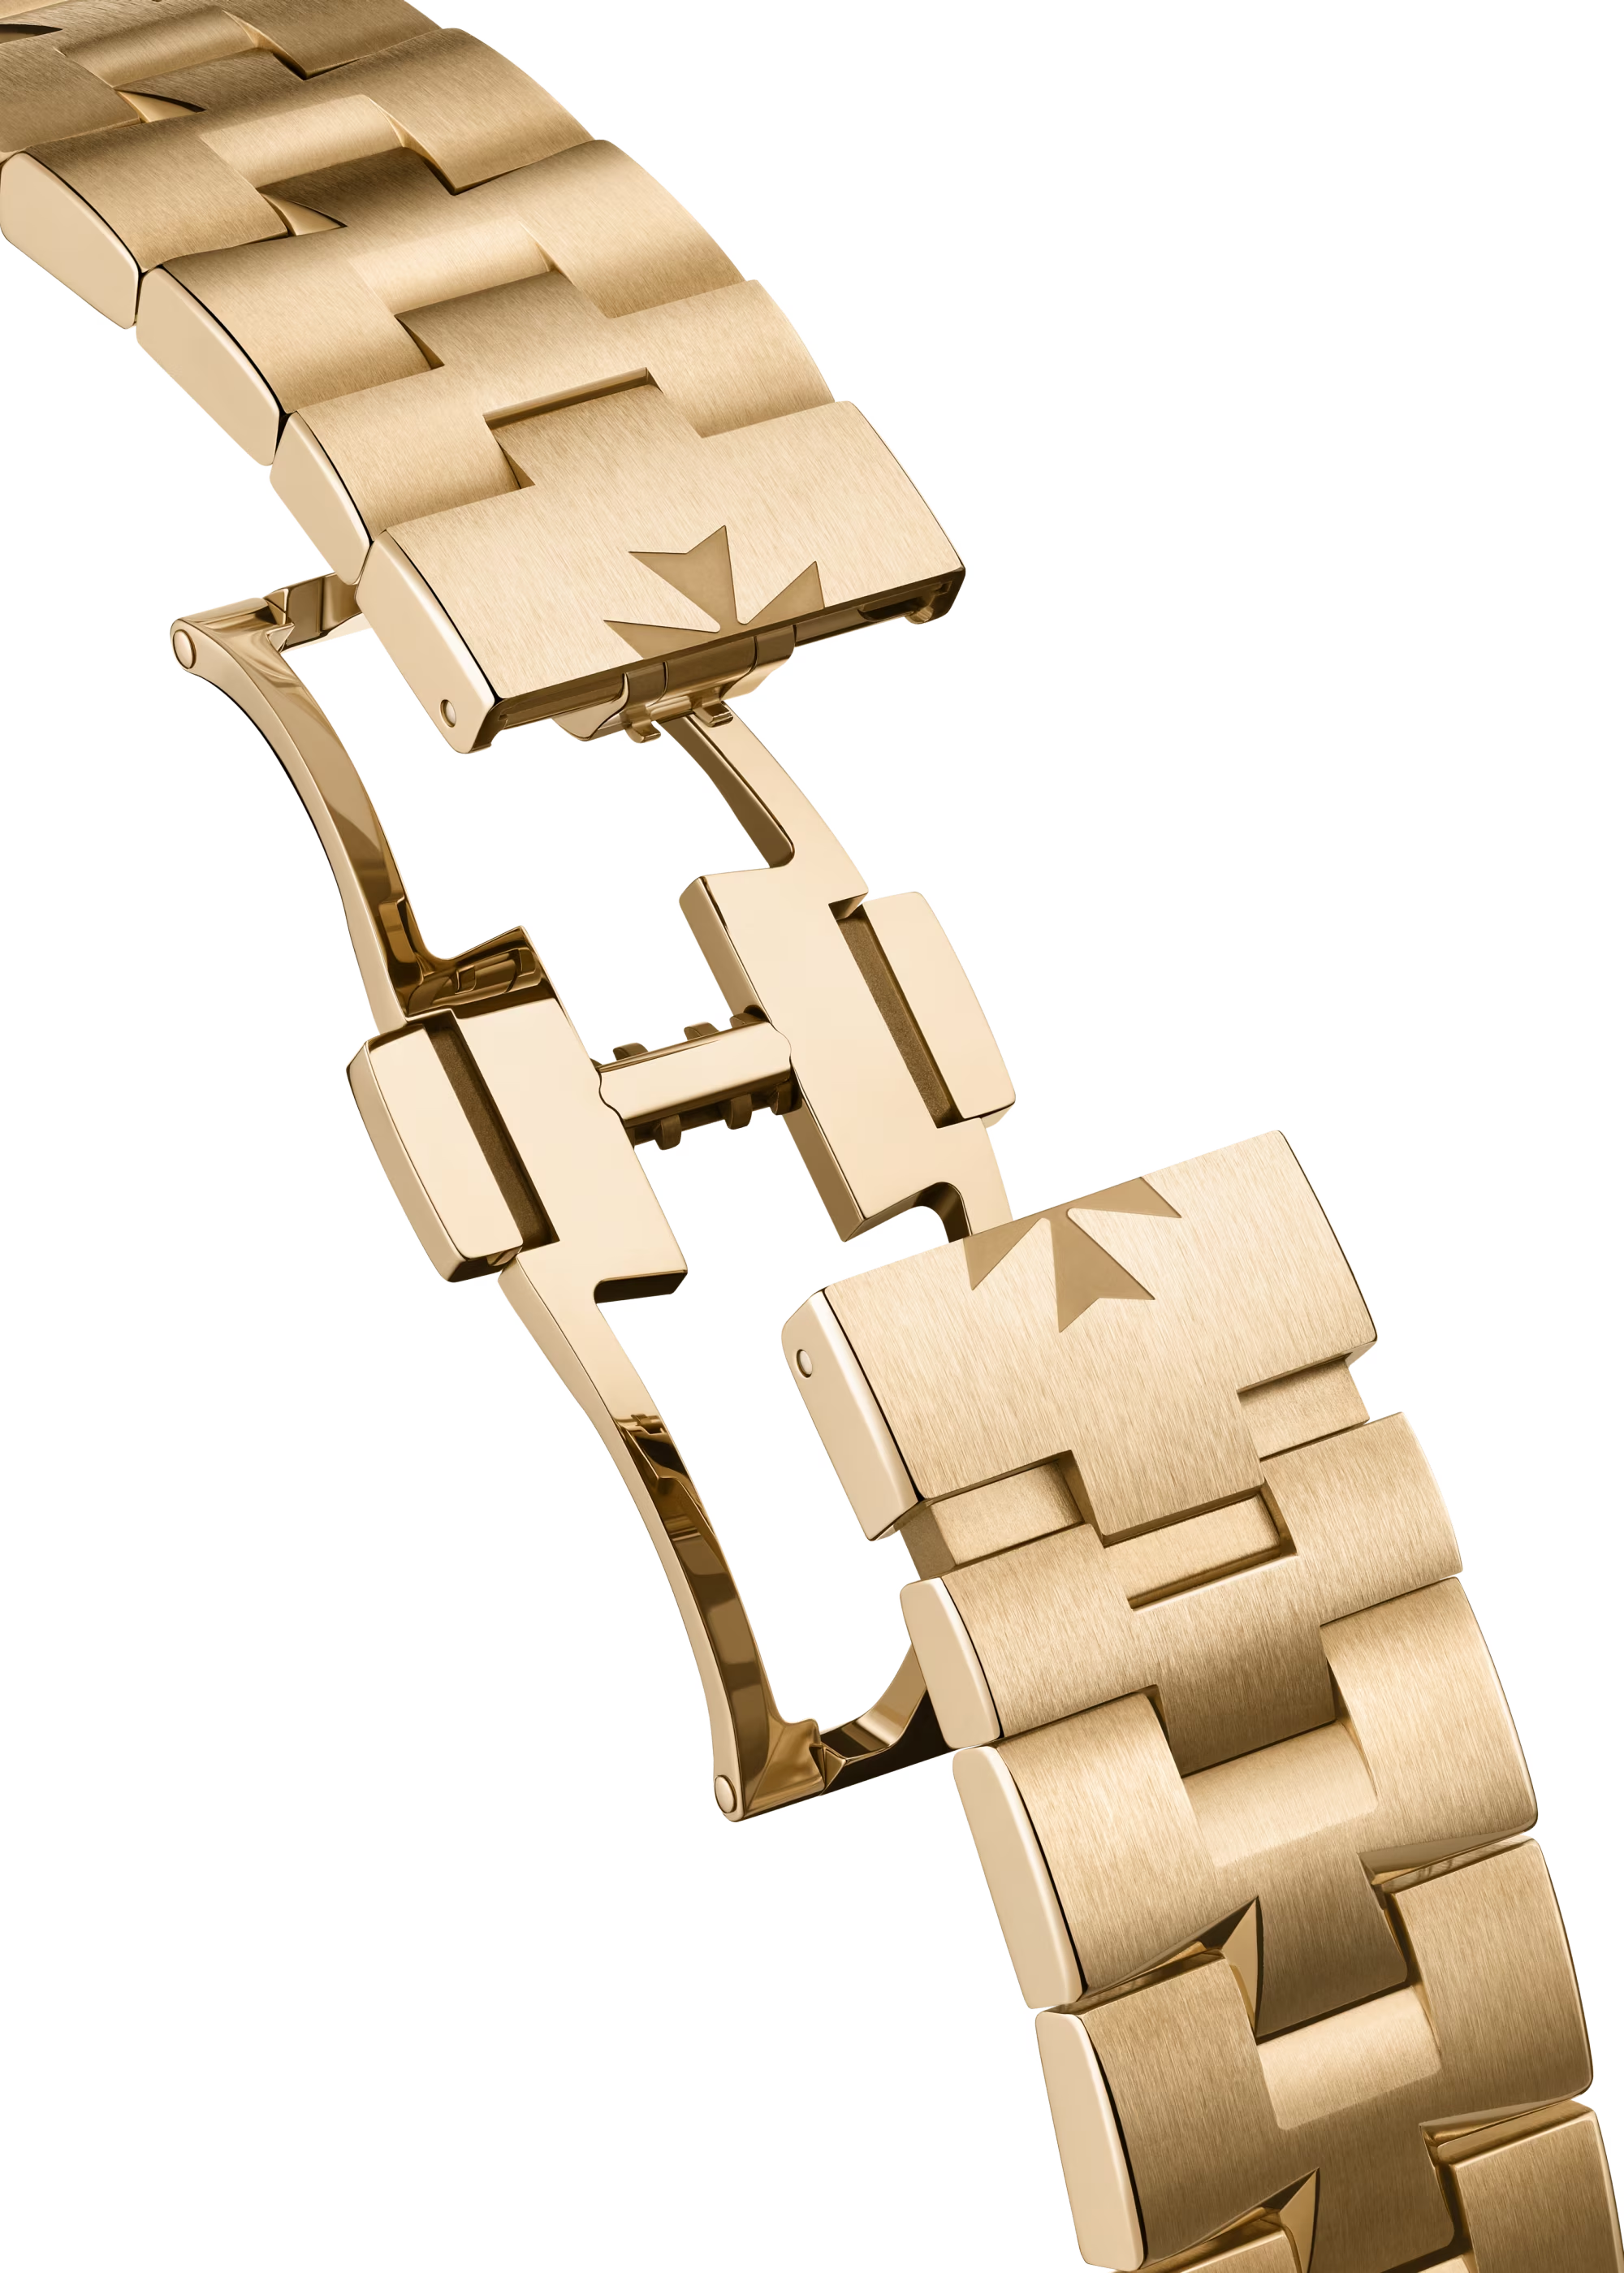 Overseas Self-winding 35mm 18ct Pink Gold Bracelet Watch